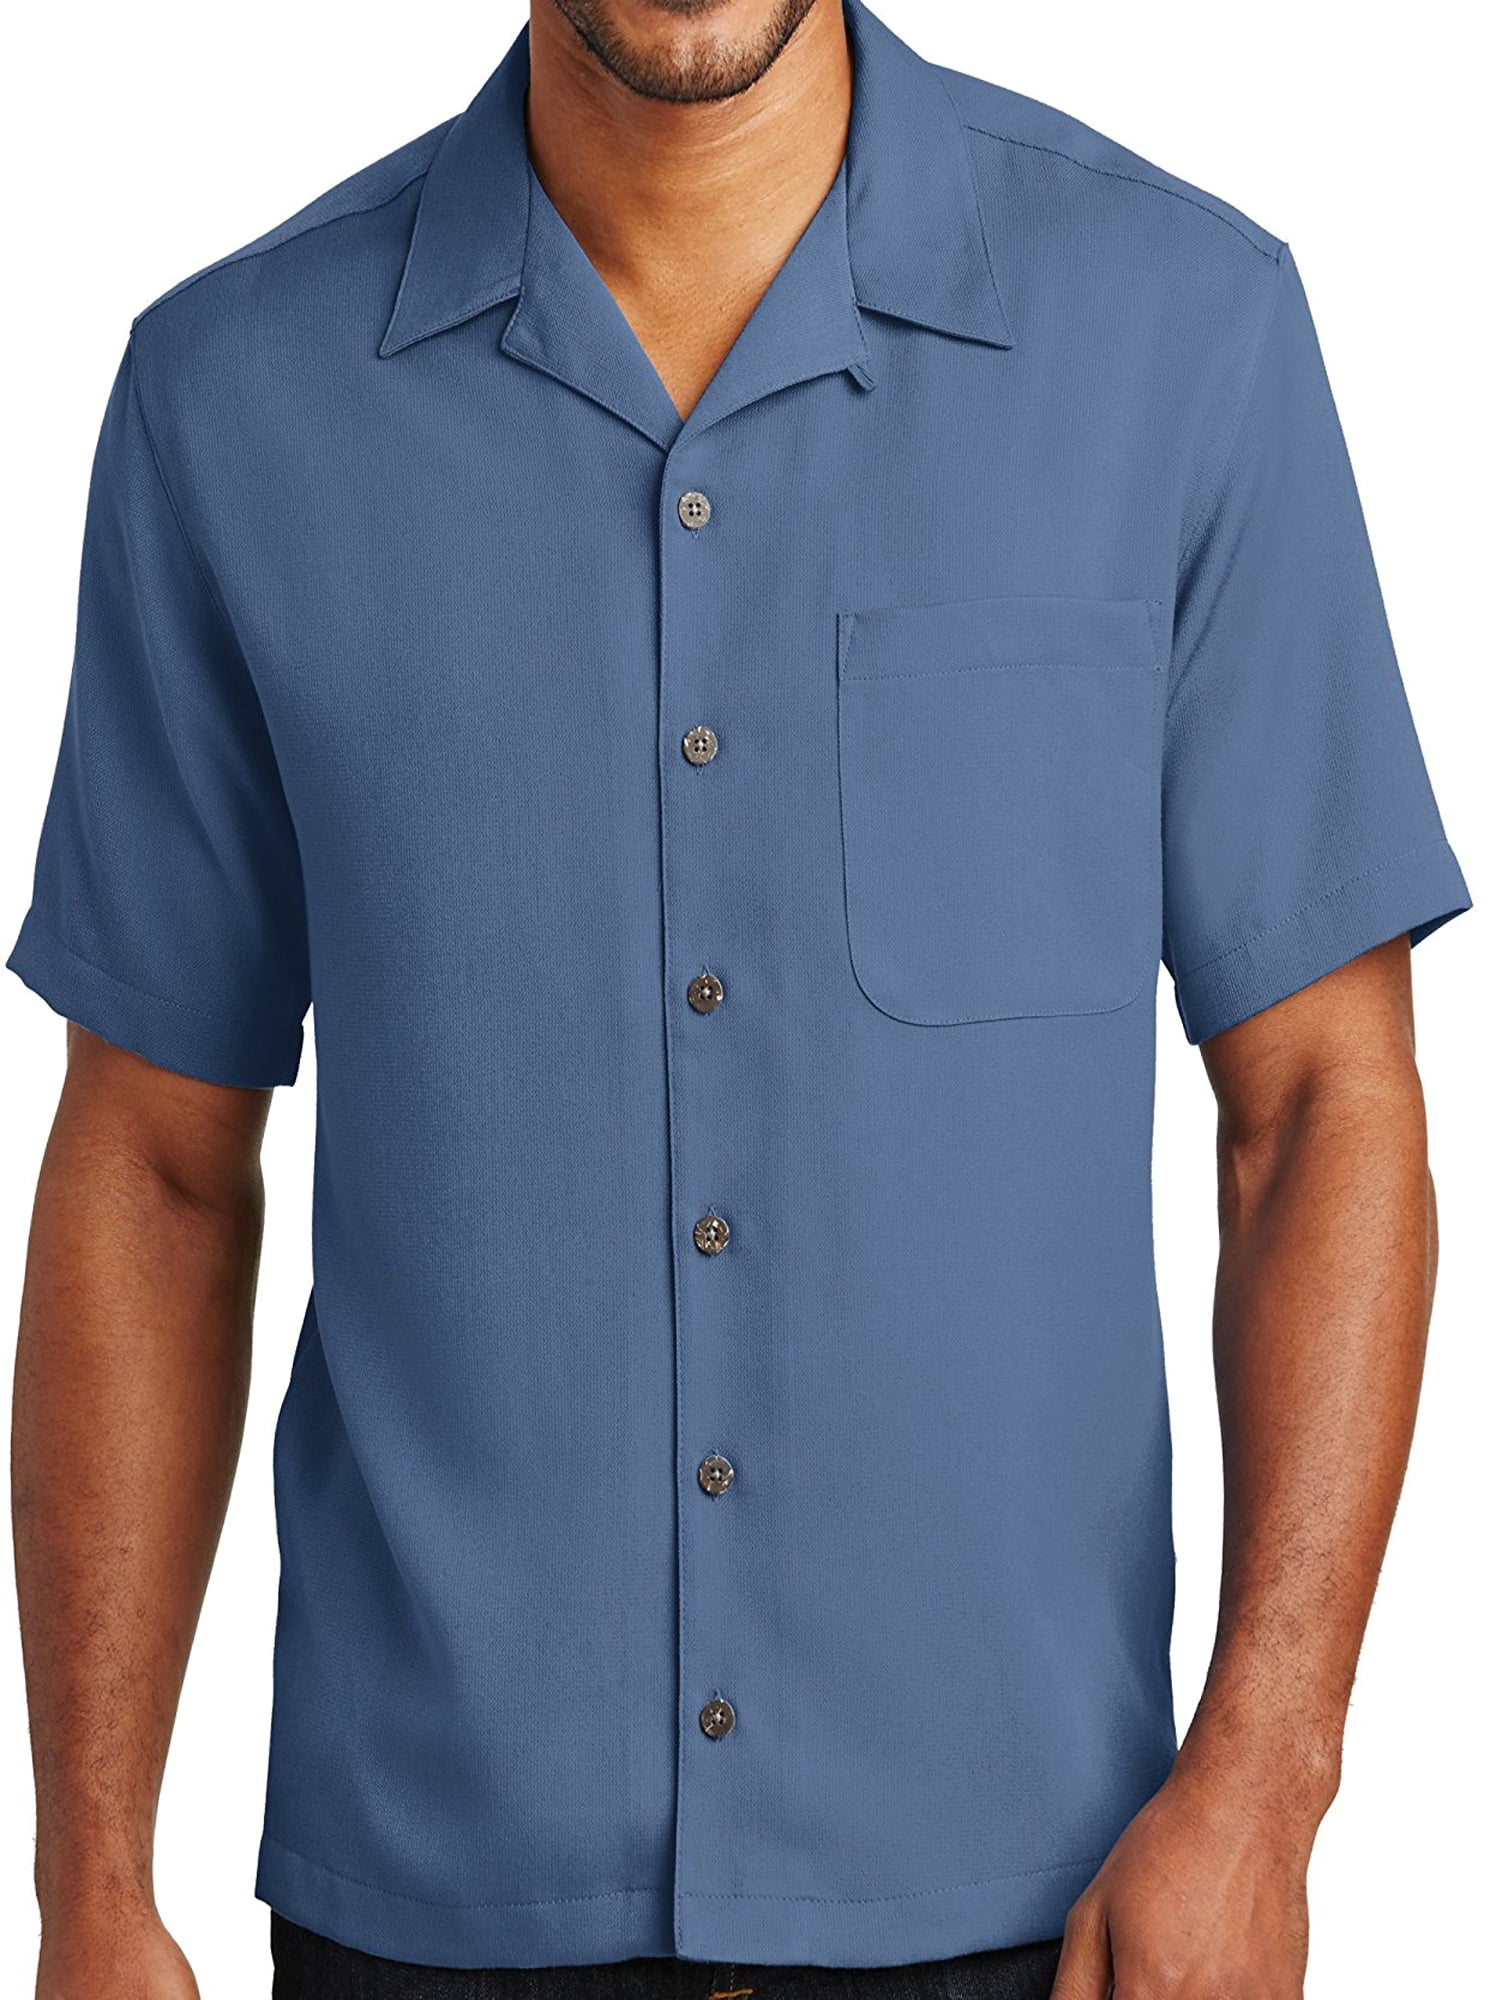 Upscale Mens Camp Shirt - Blue, Medium 